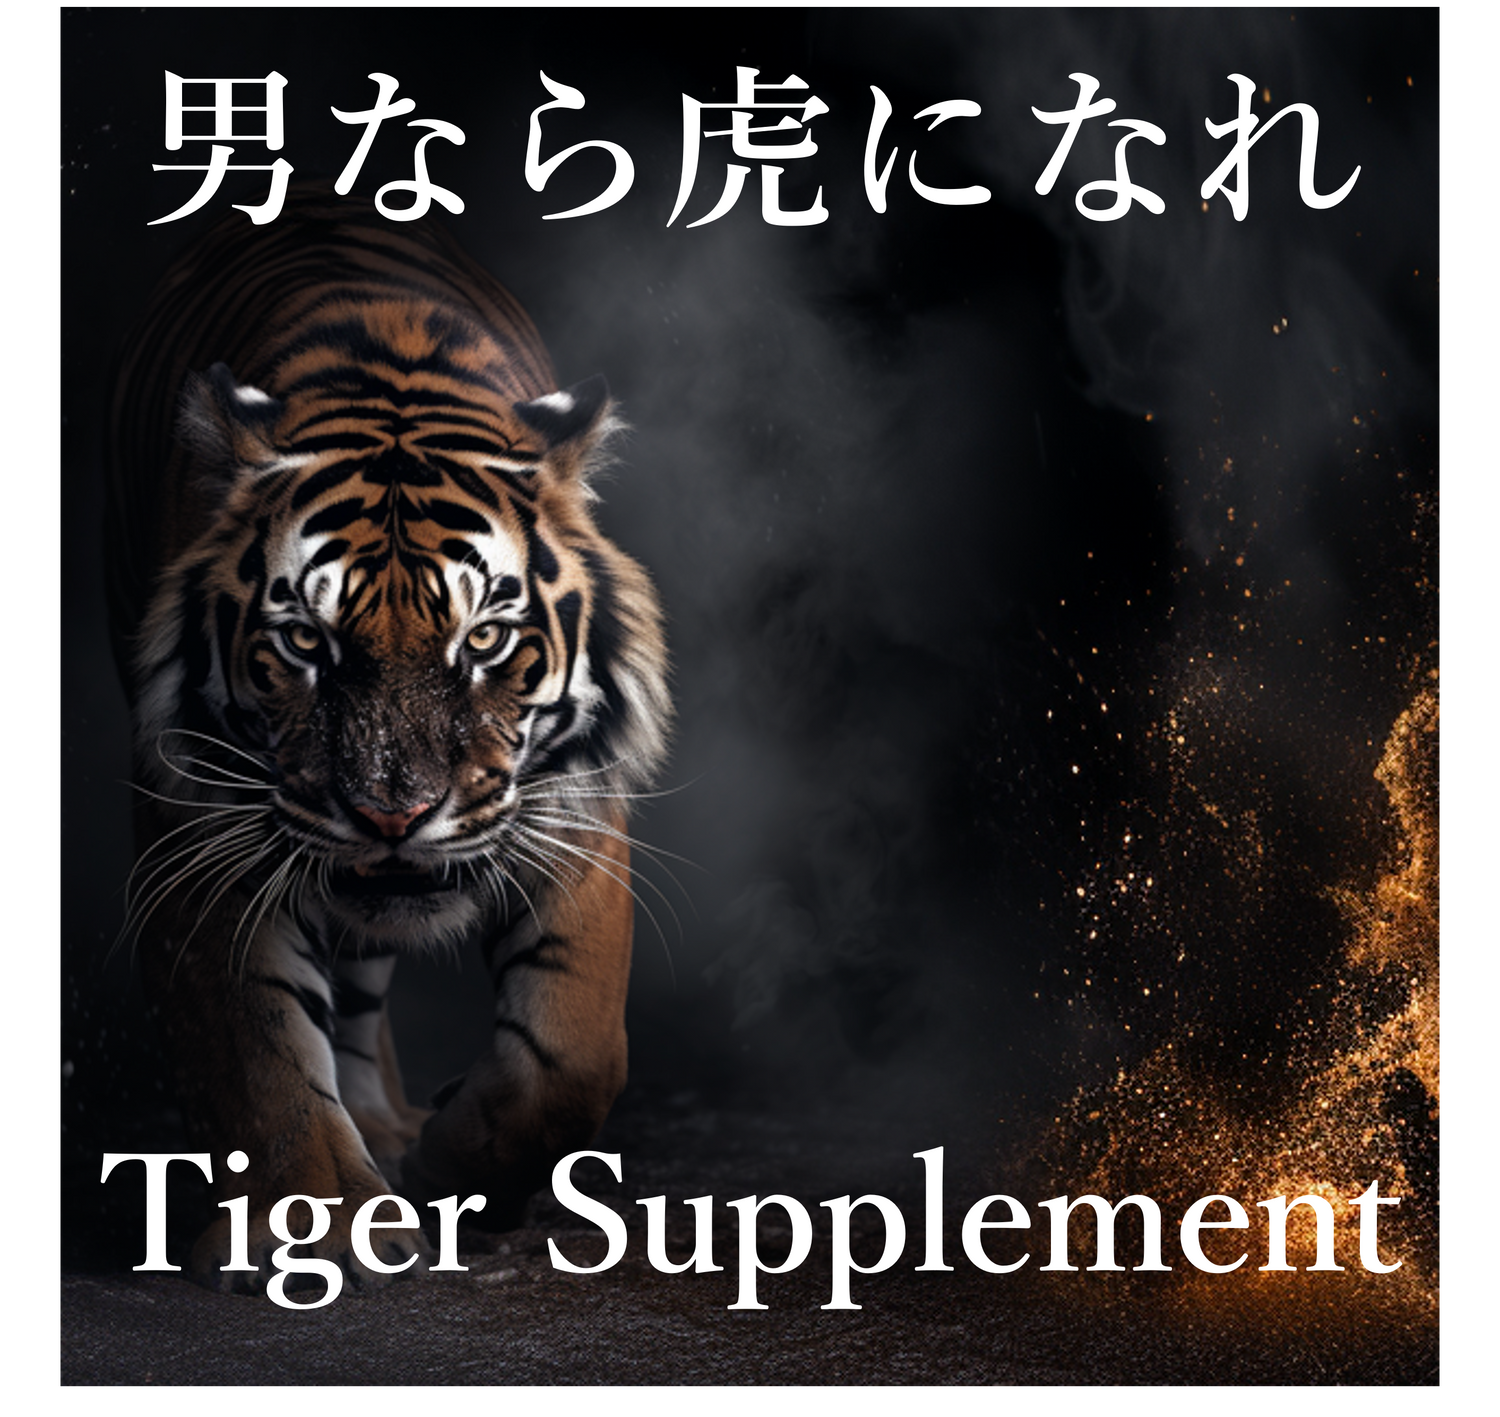 Tiger Supplement